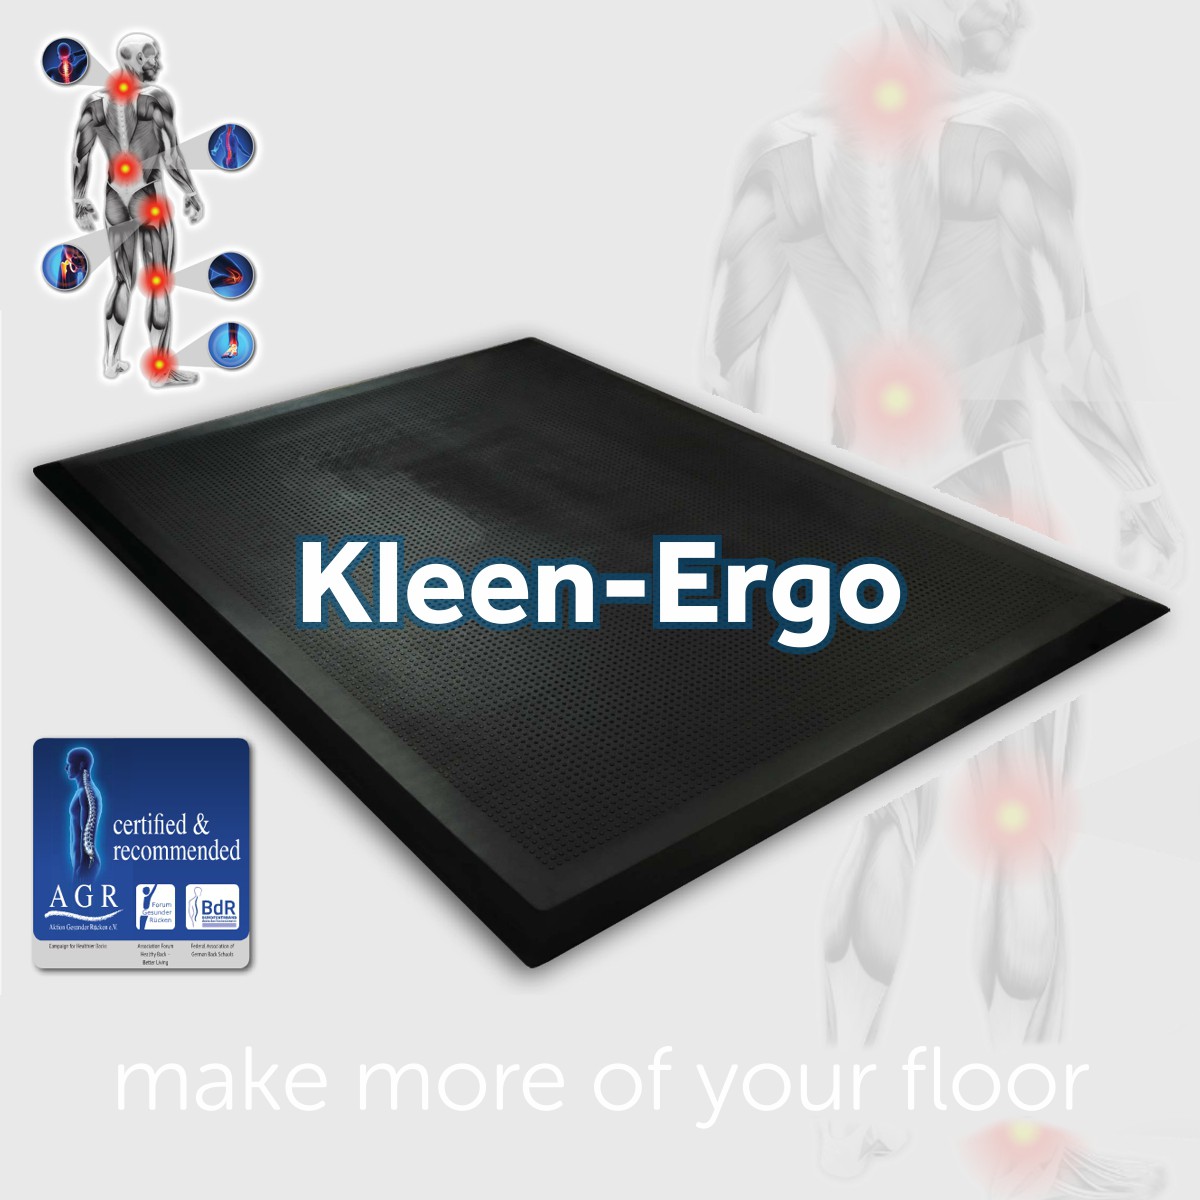 Kleen-Ergo